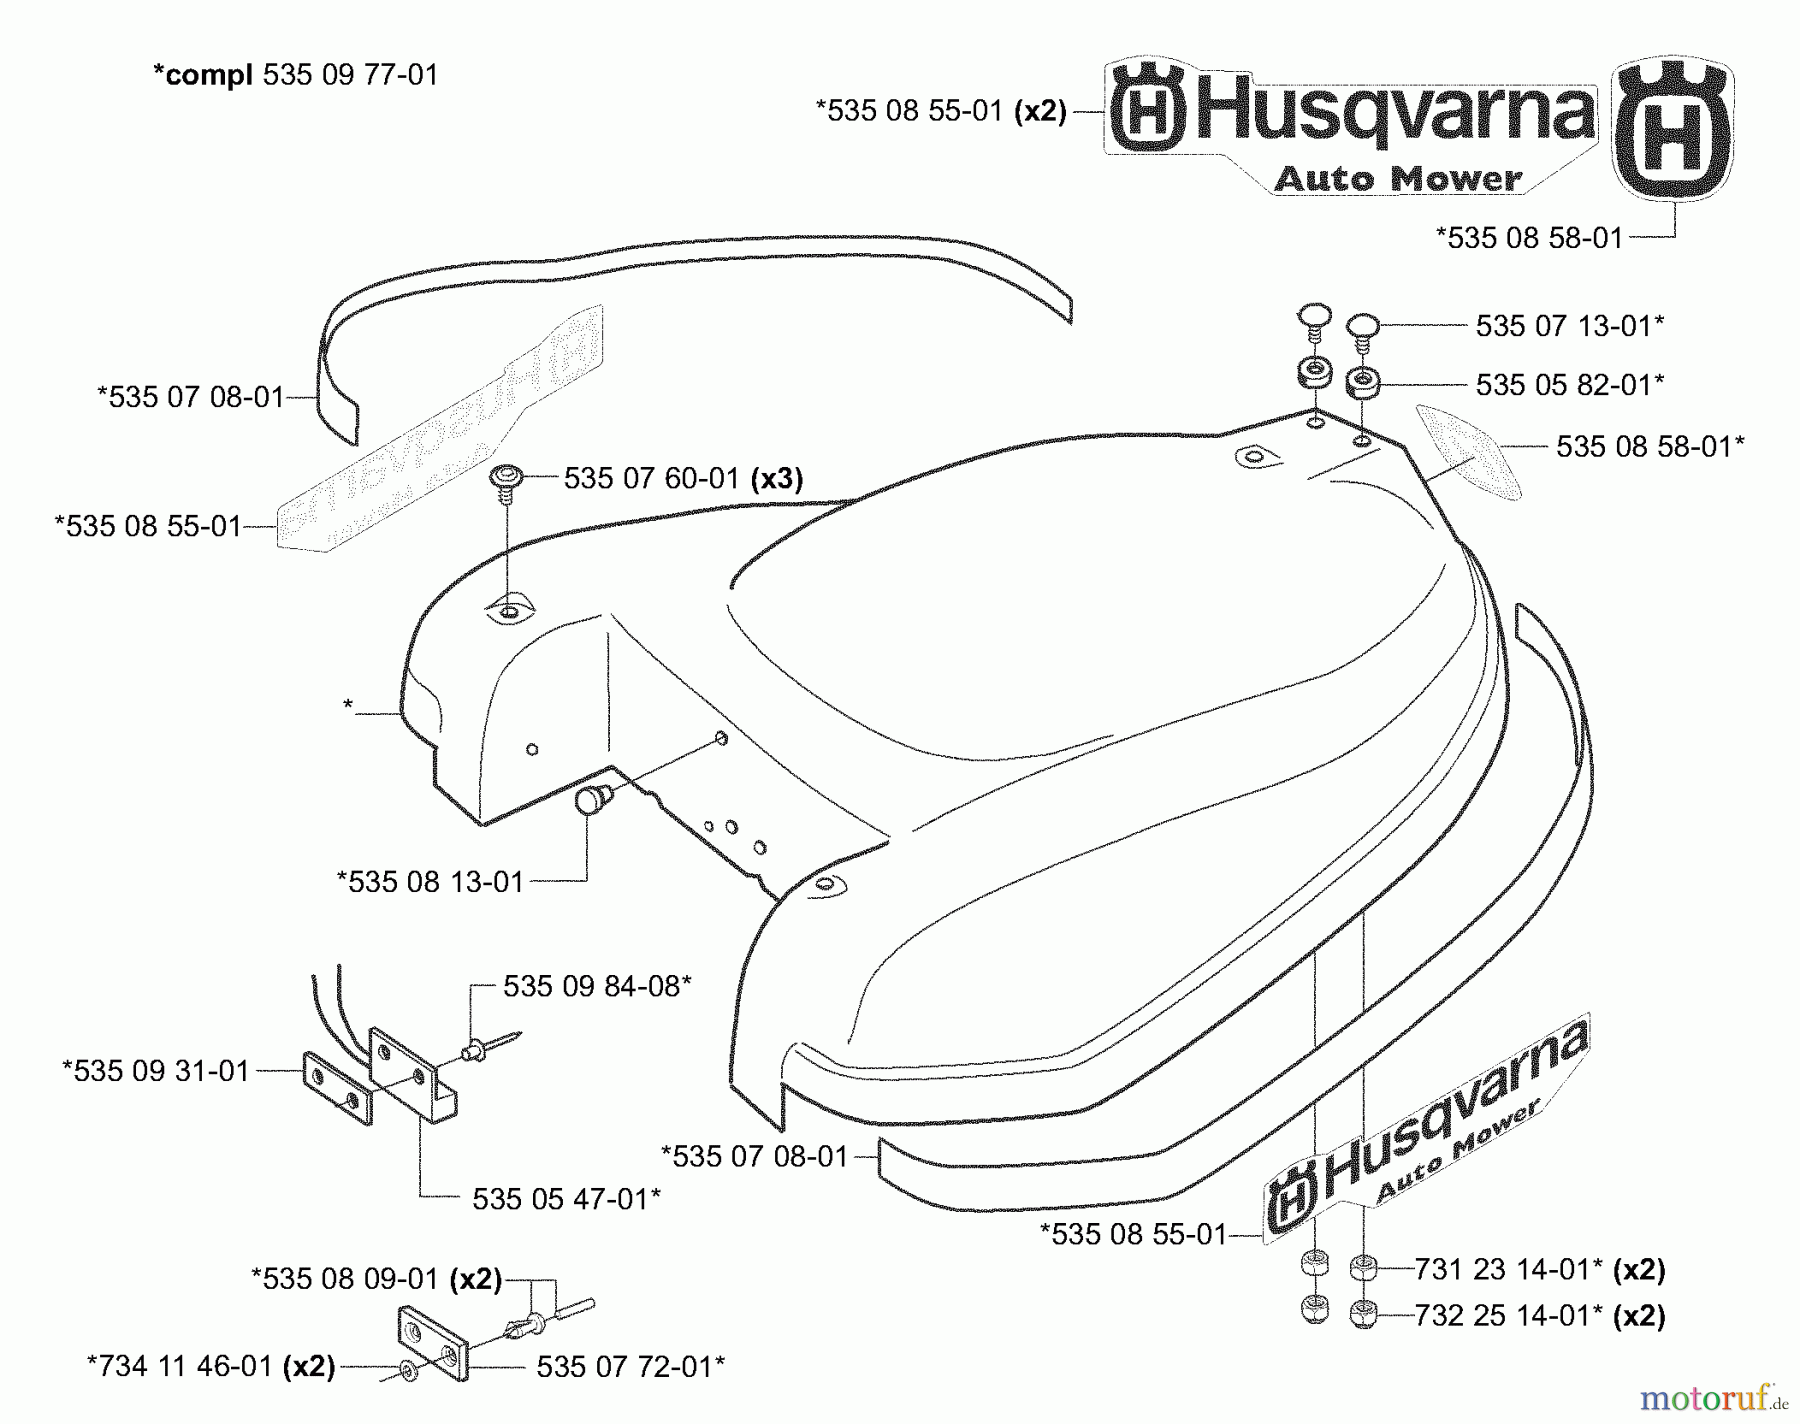  Husqvarna Automower, Mähroboter 953532201 - Husqvarna Auto Mower (2003-04 & After) Body Assembly